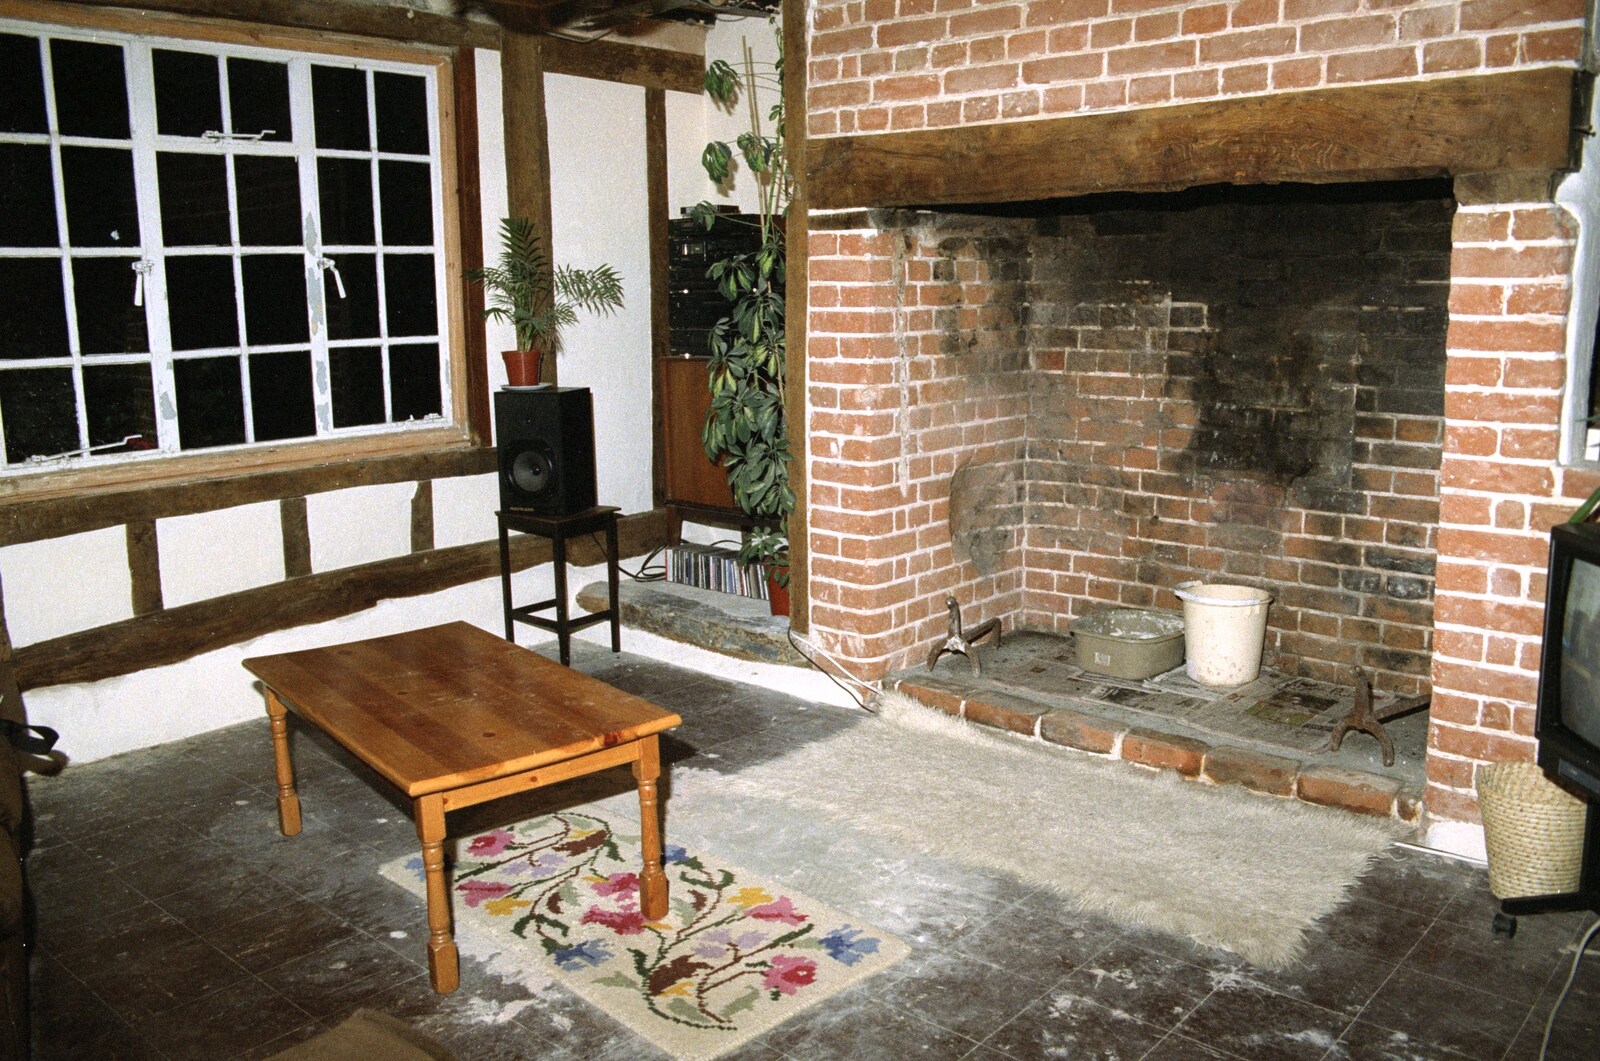 The inglenook fireplace from Grandmother's Seventieth Birthday, Brockenhurst and Keyhaven, Hampshire - 11th September 1994